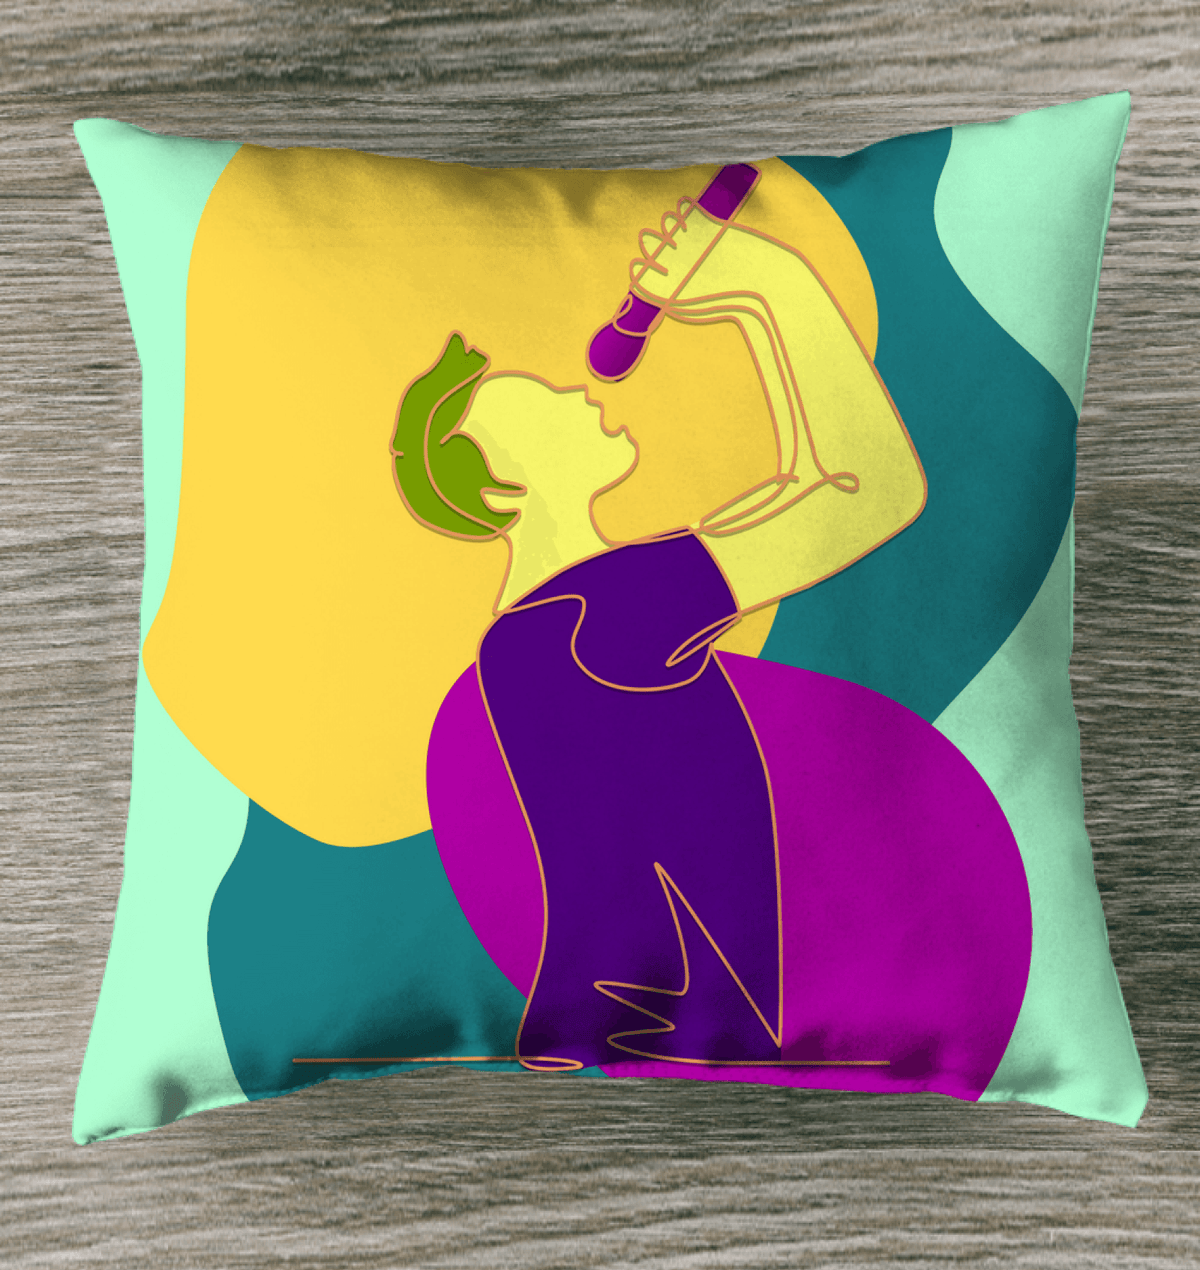 Singing Guy Indoor Pillow - Beyond T-shirts